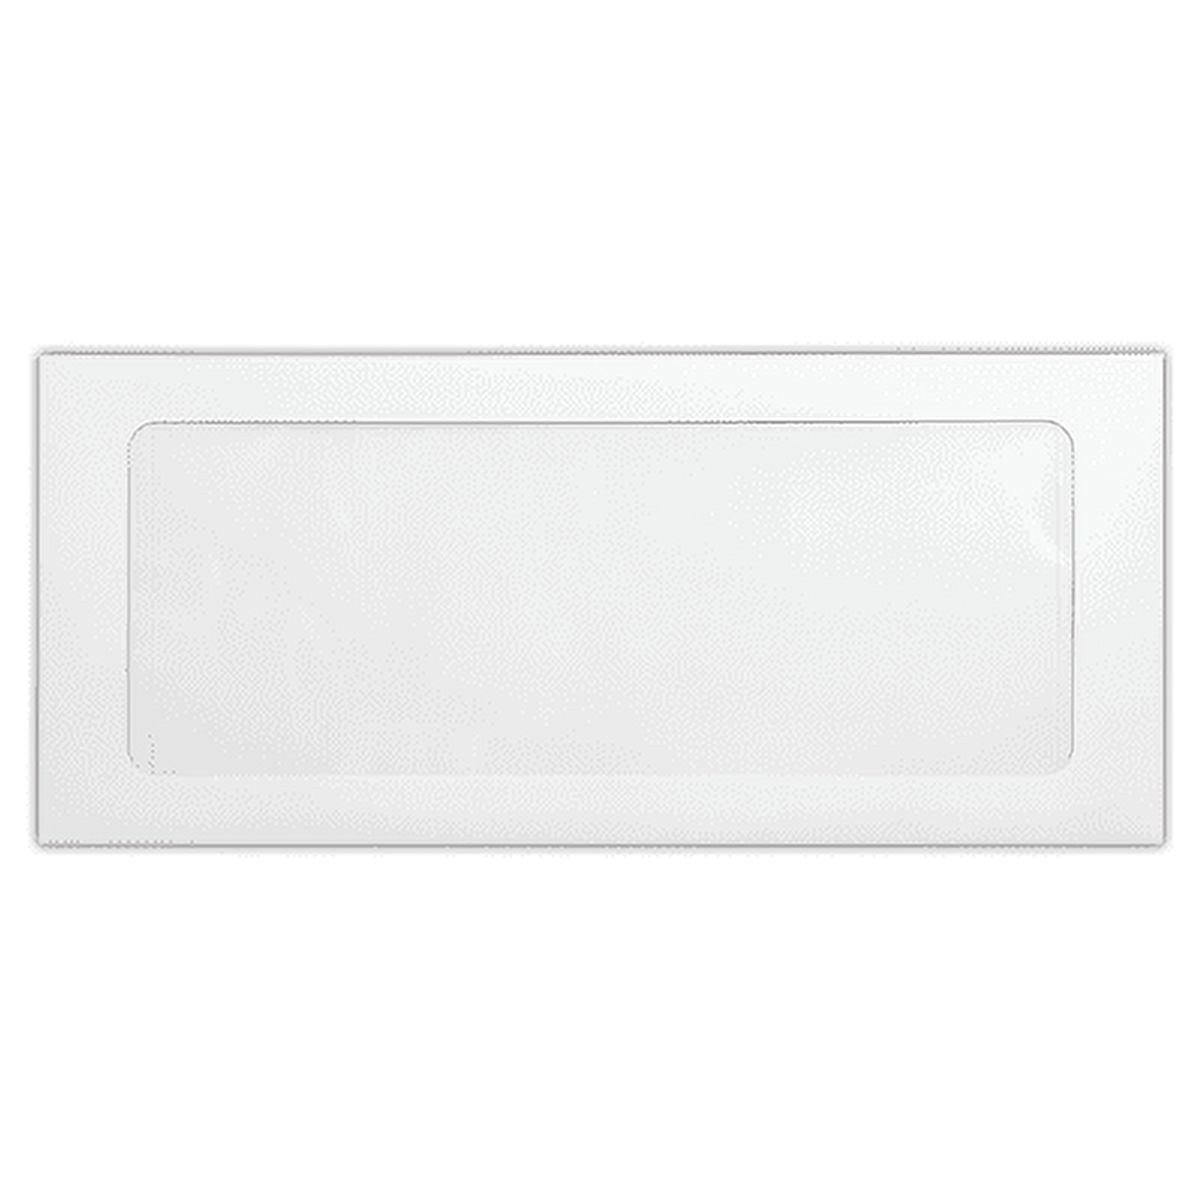 A4 ENVELOPE WHITE W WINDOW 229X324MM X1 - AB Projects LTD